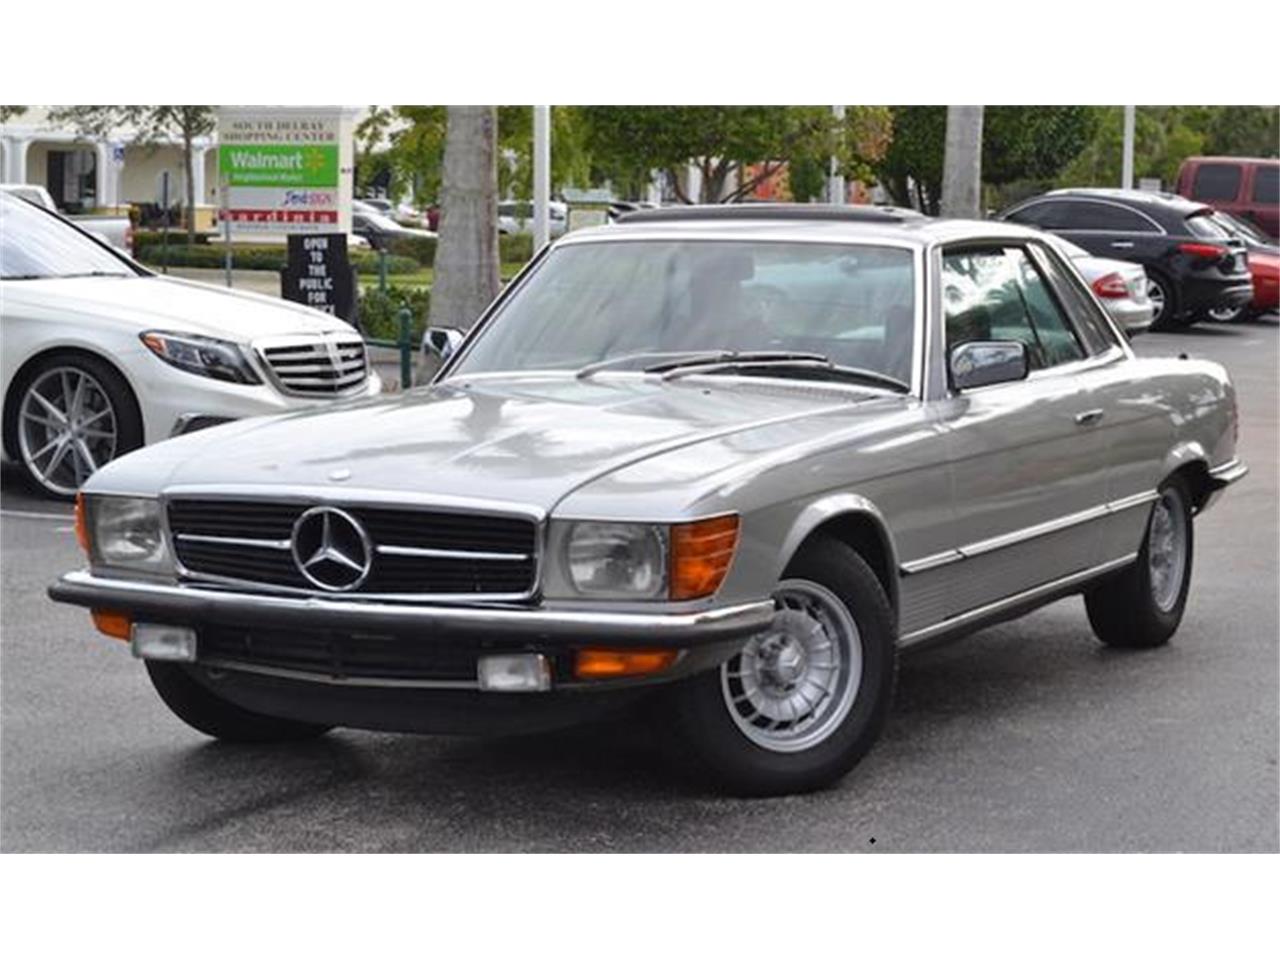 1979 Mercedes Benz 450slc For Sale Classiccarscom Cc 1165029